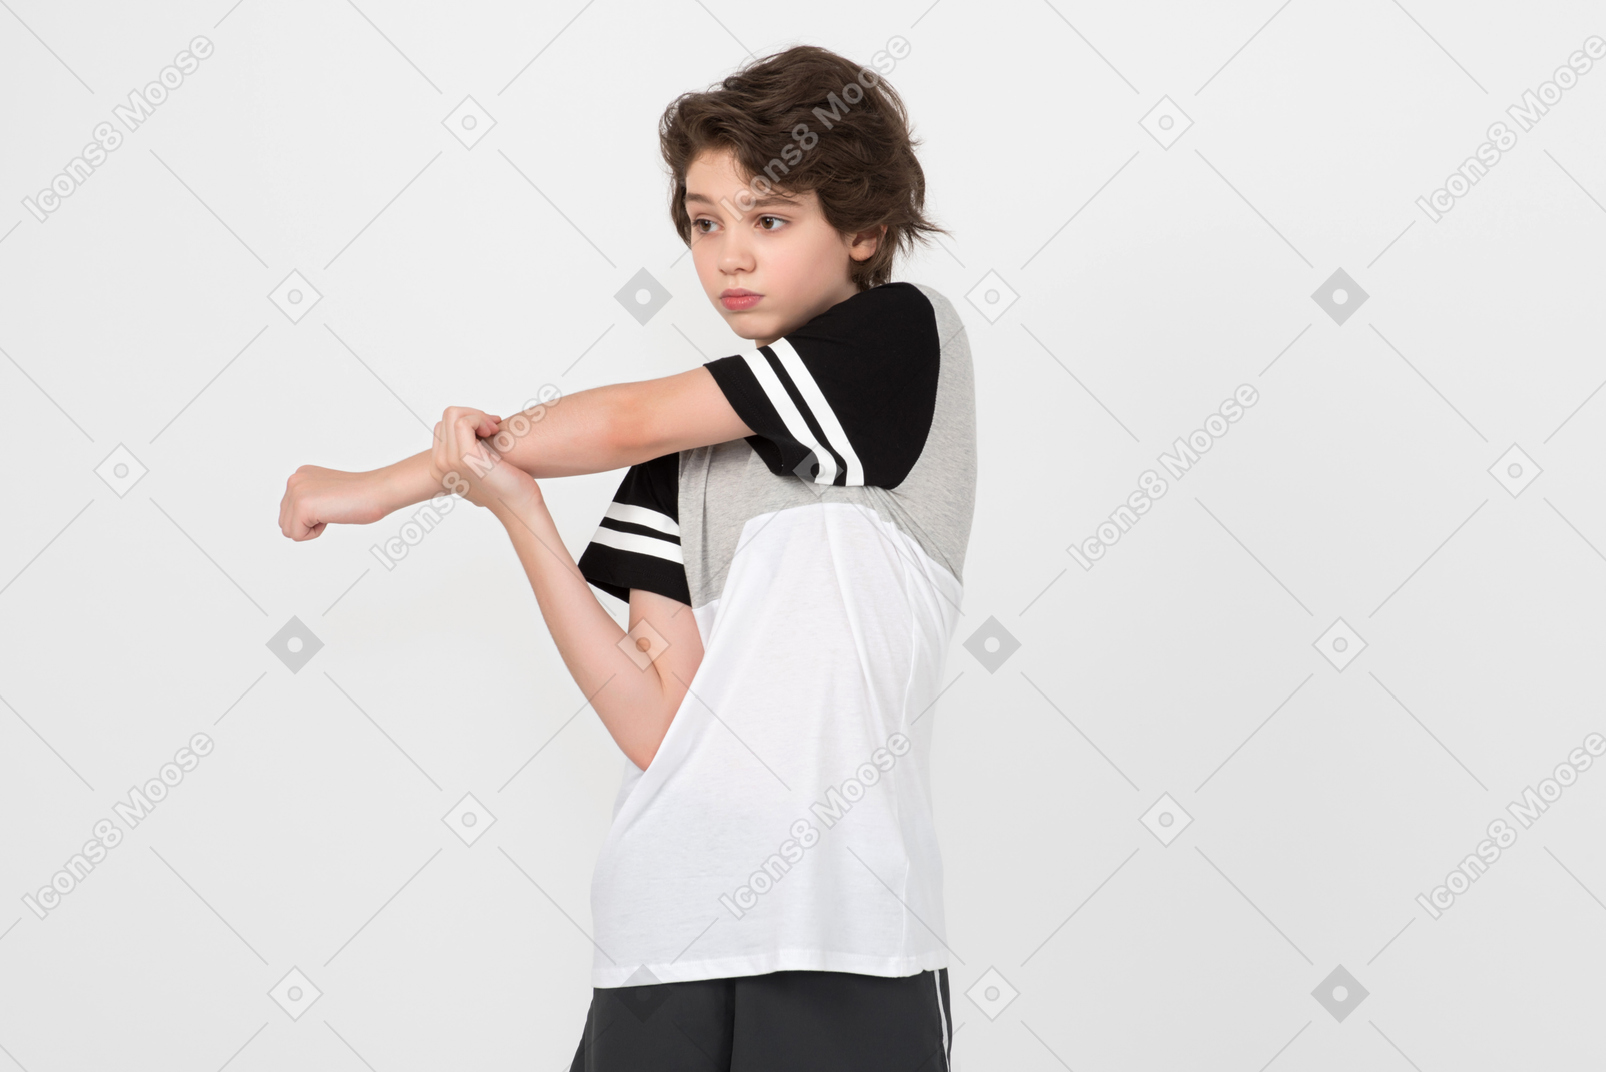 Boy involved in stretching